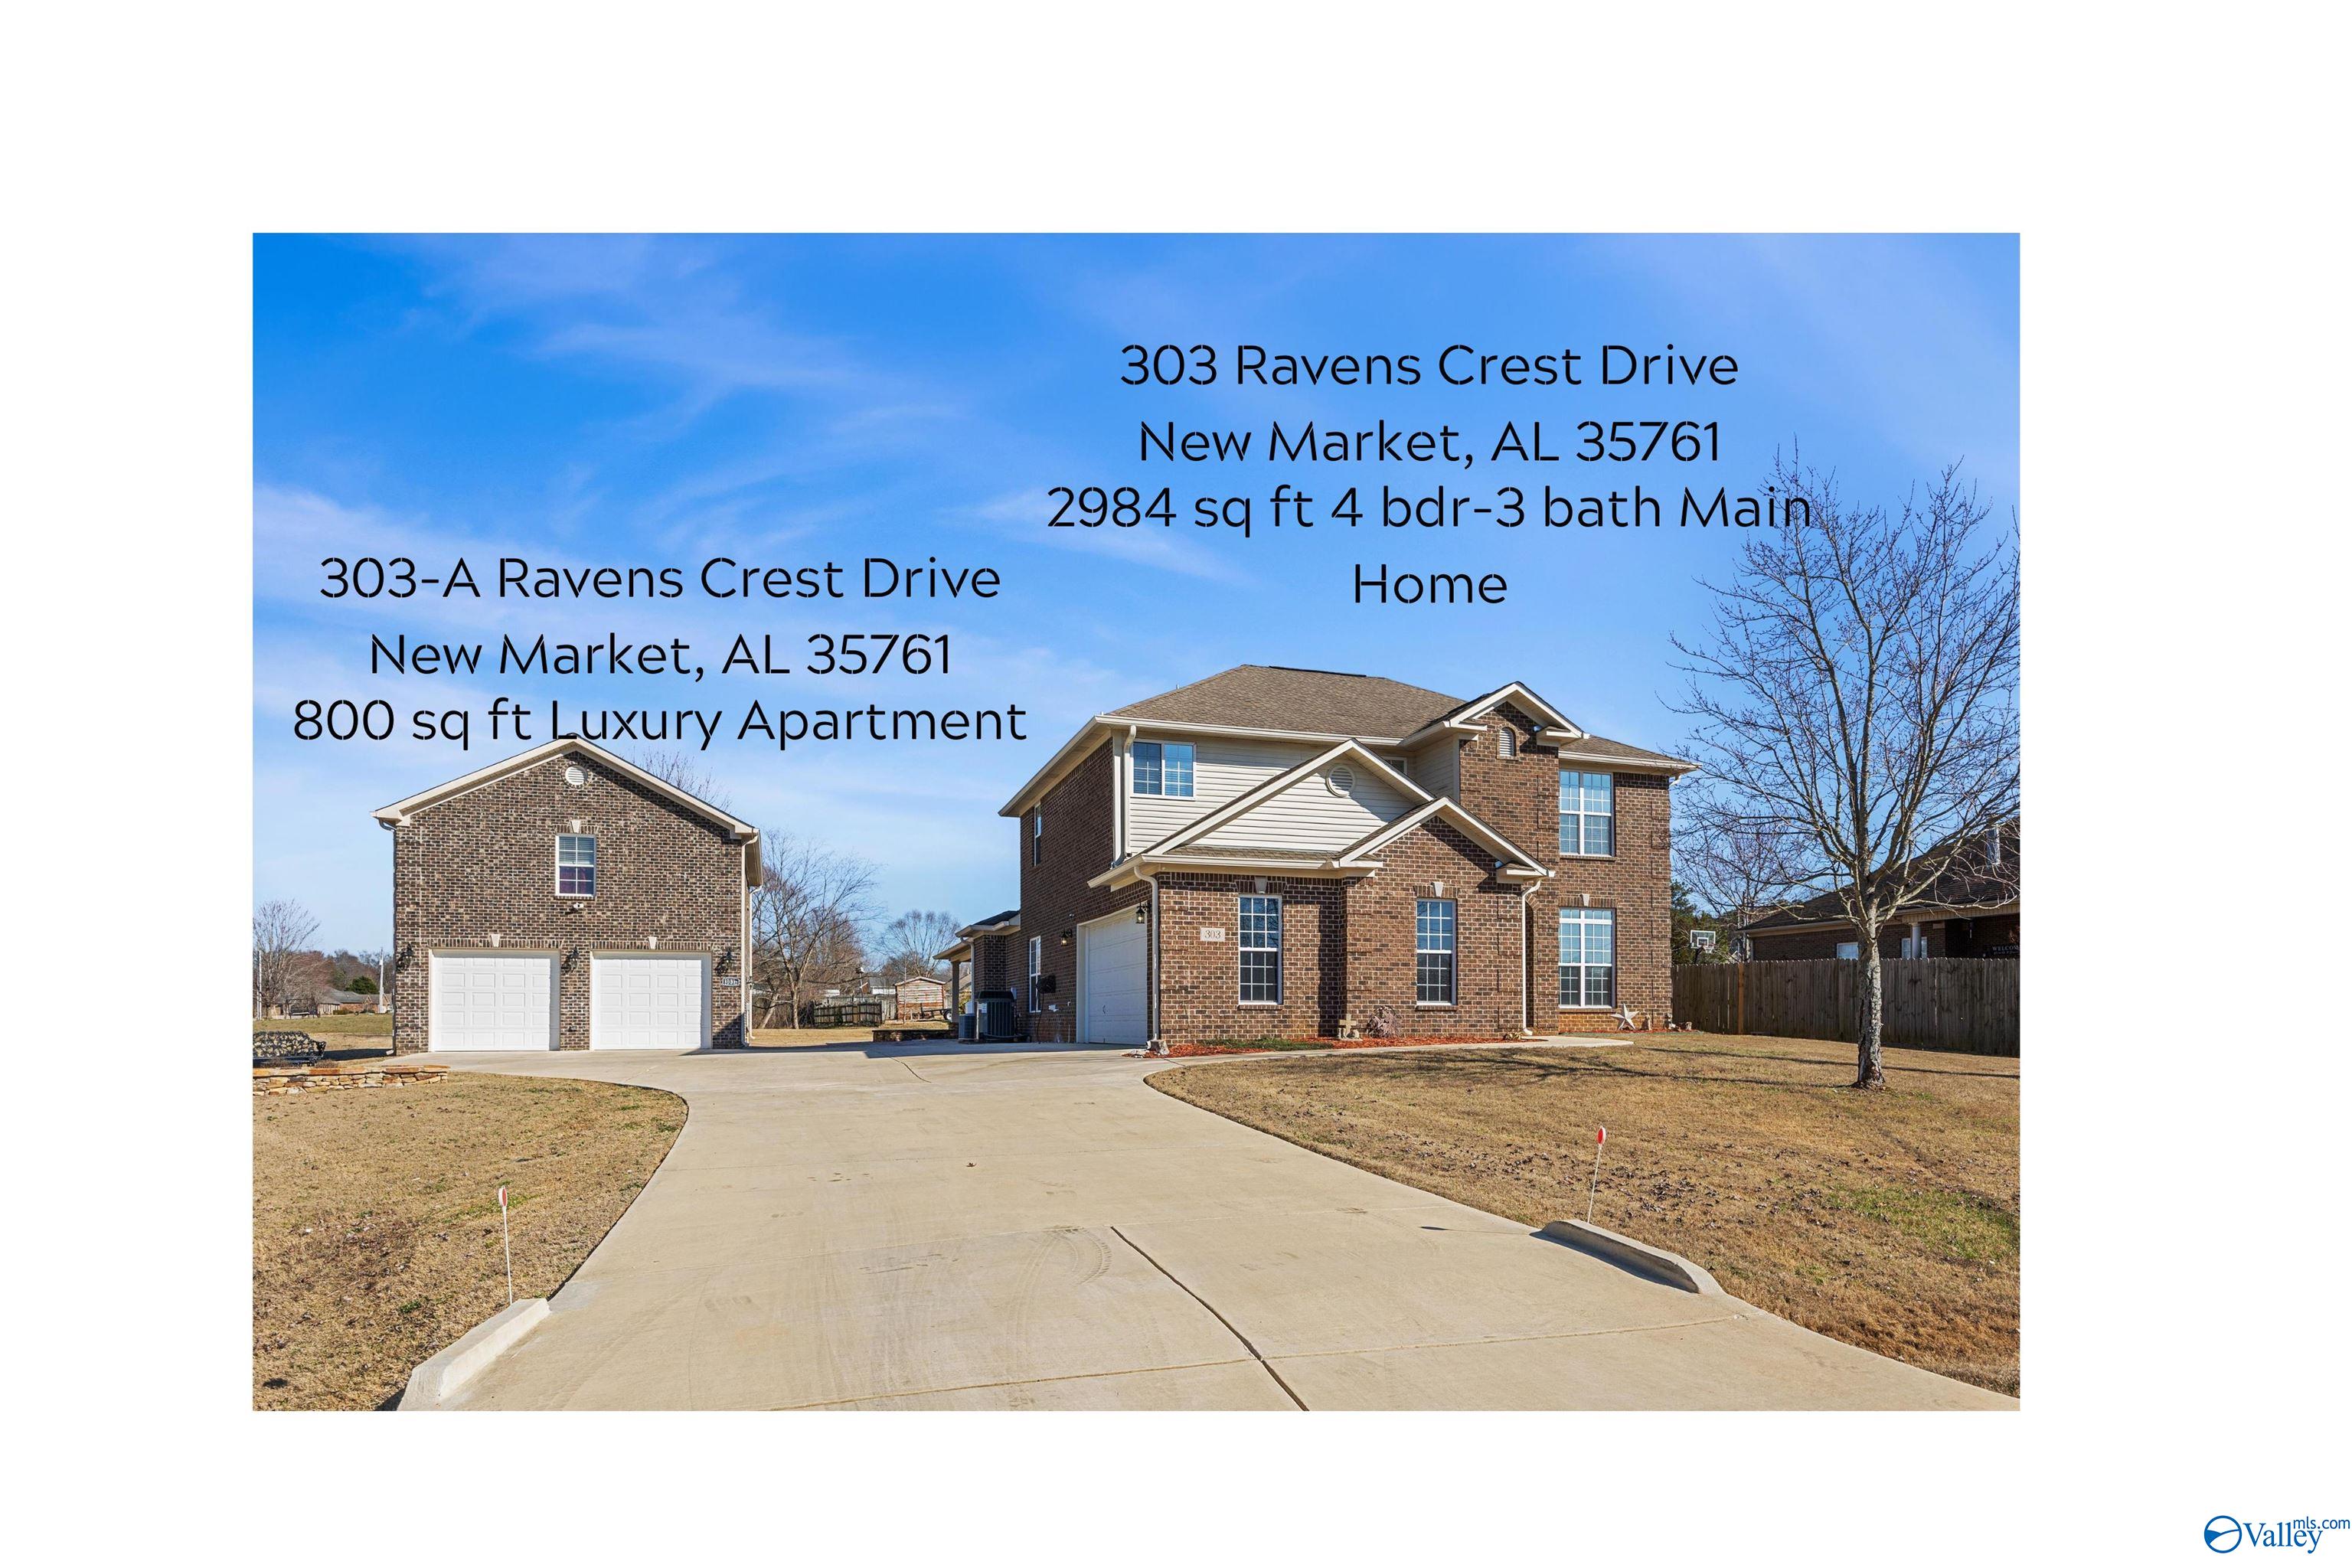 Property: 303 Ravens Crest Drive,New Market, AL